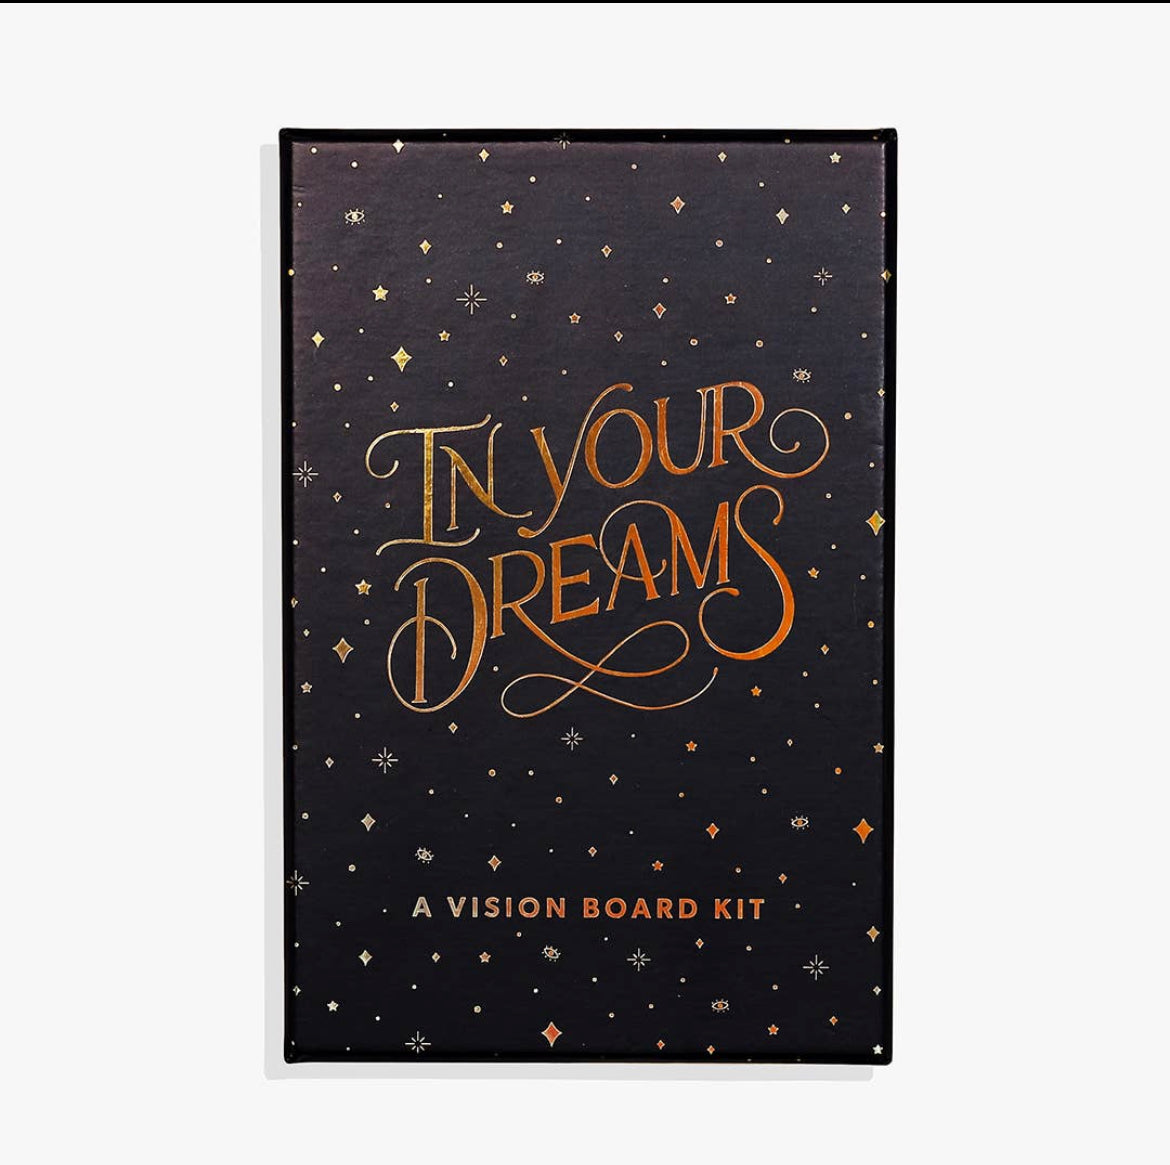 In your dreams : vision board kit